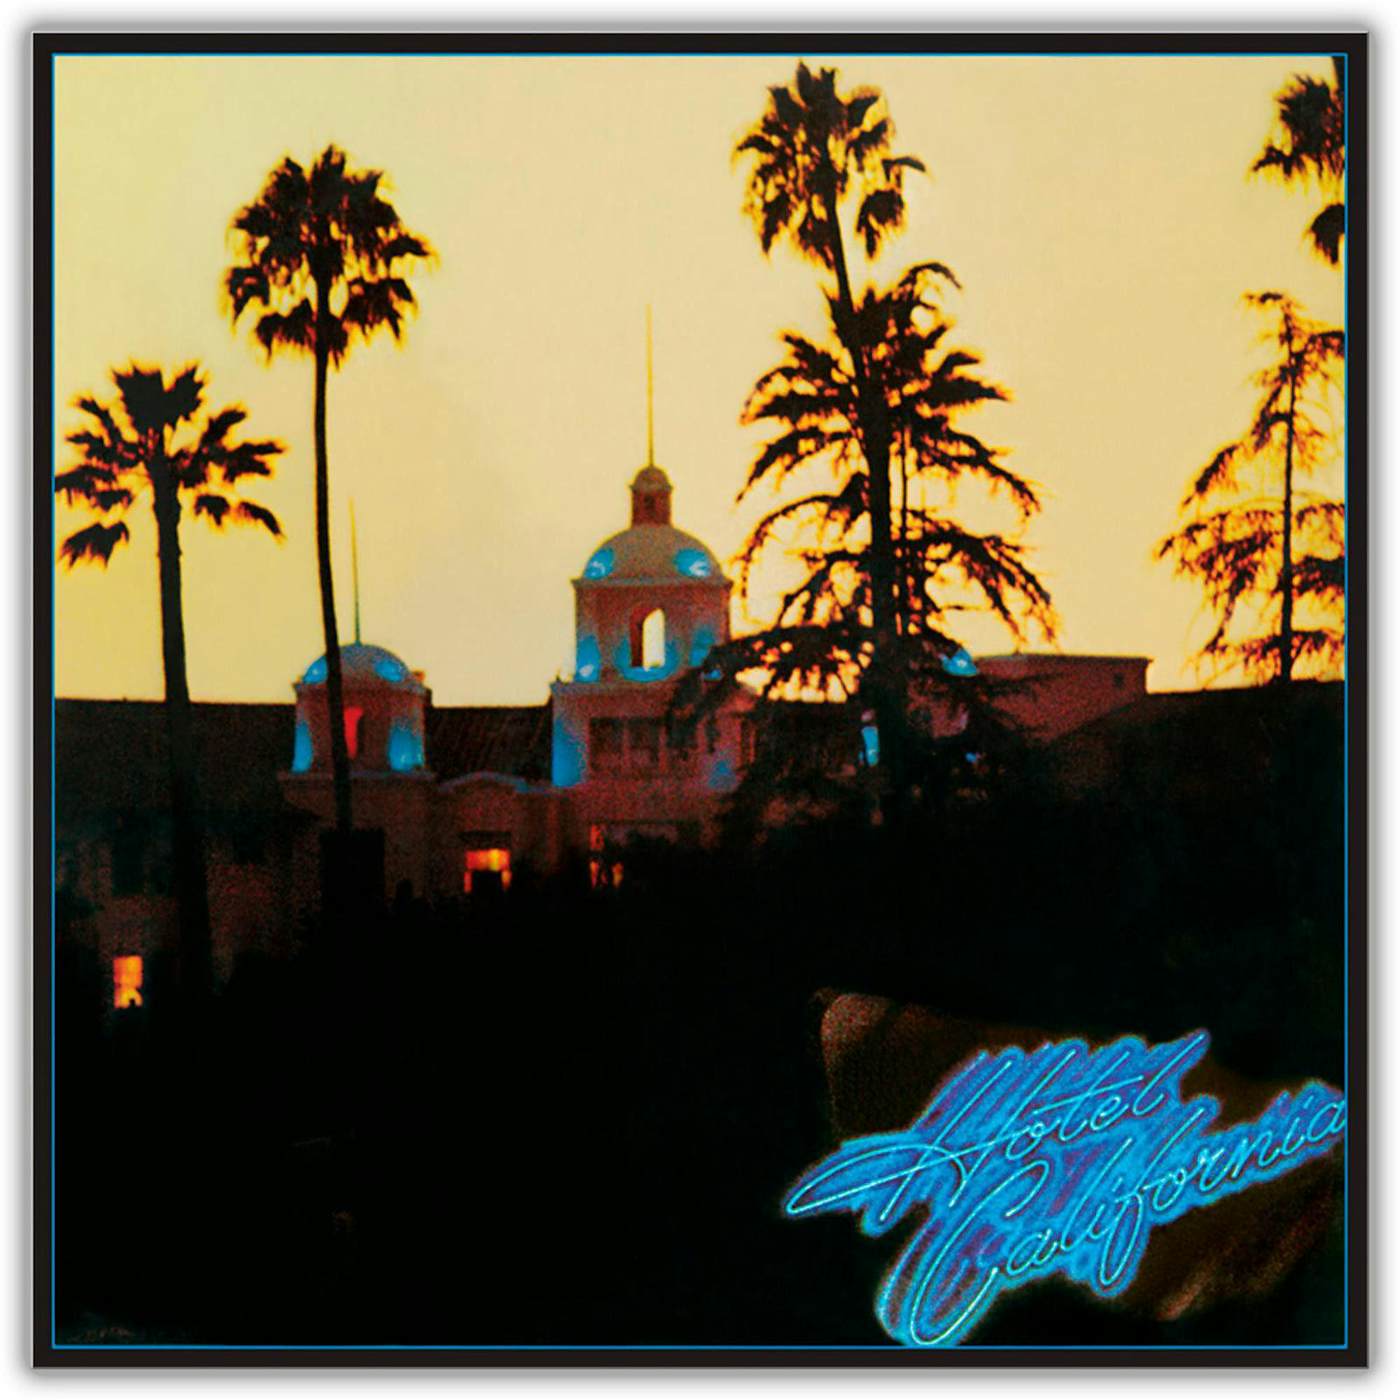 Eagles Hotel California (Limited Edition/180g) Vinyl Record